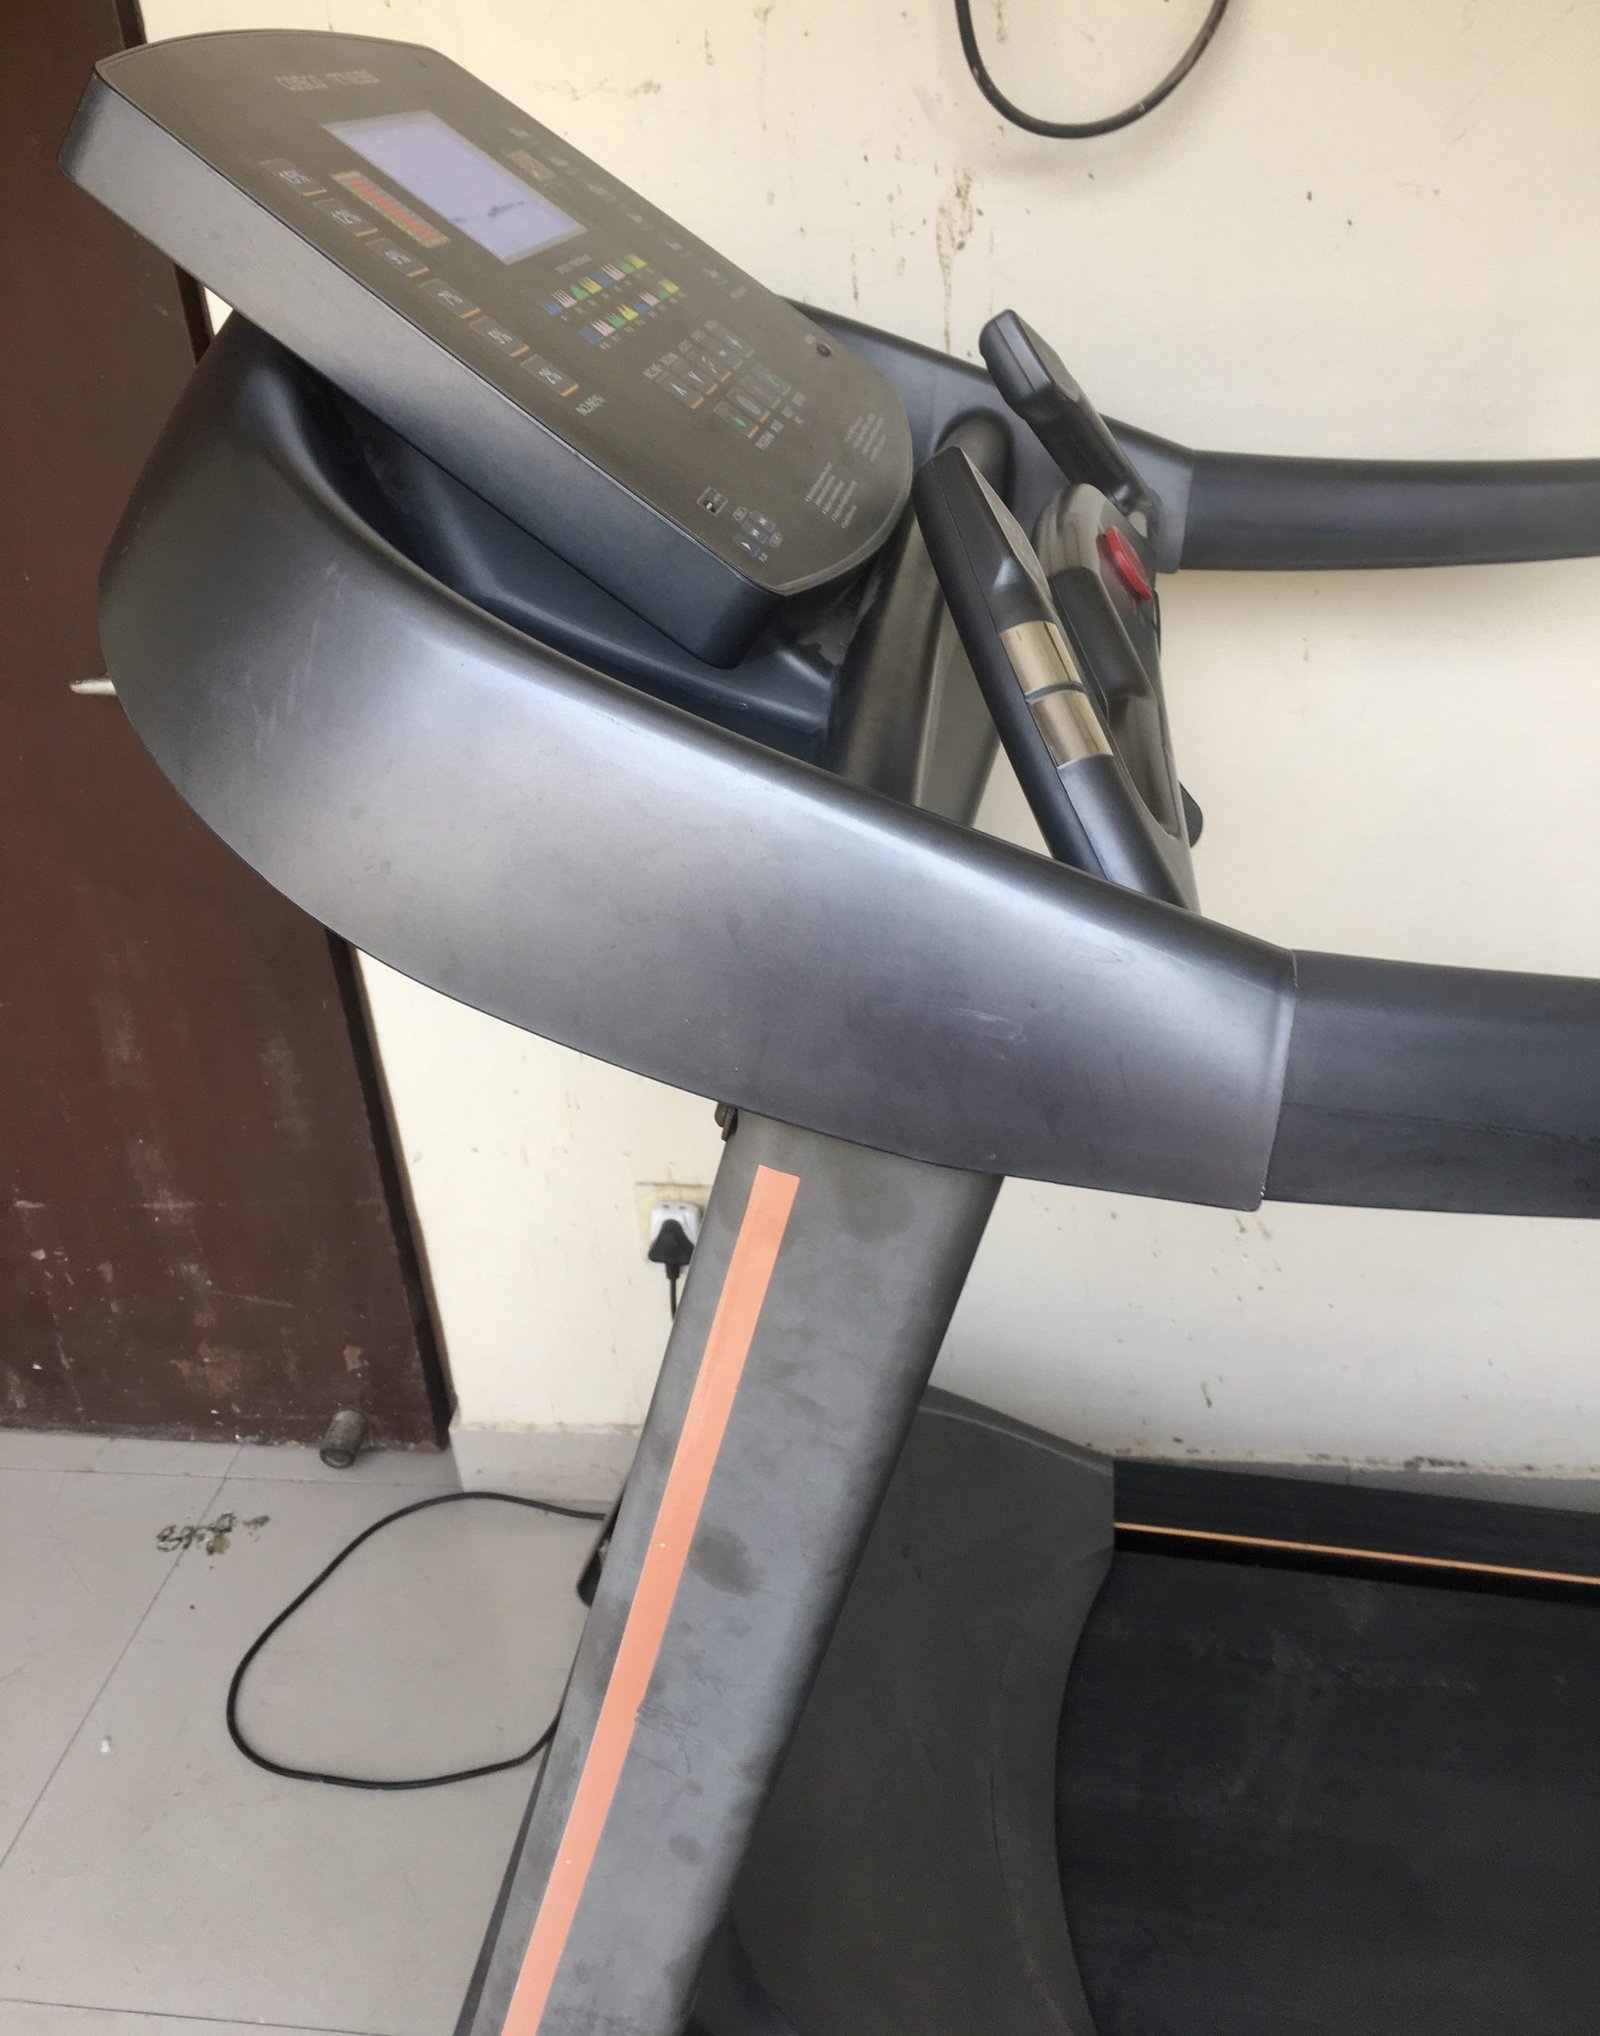 Cosco motorised treadmill